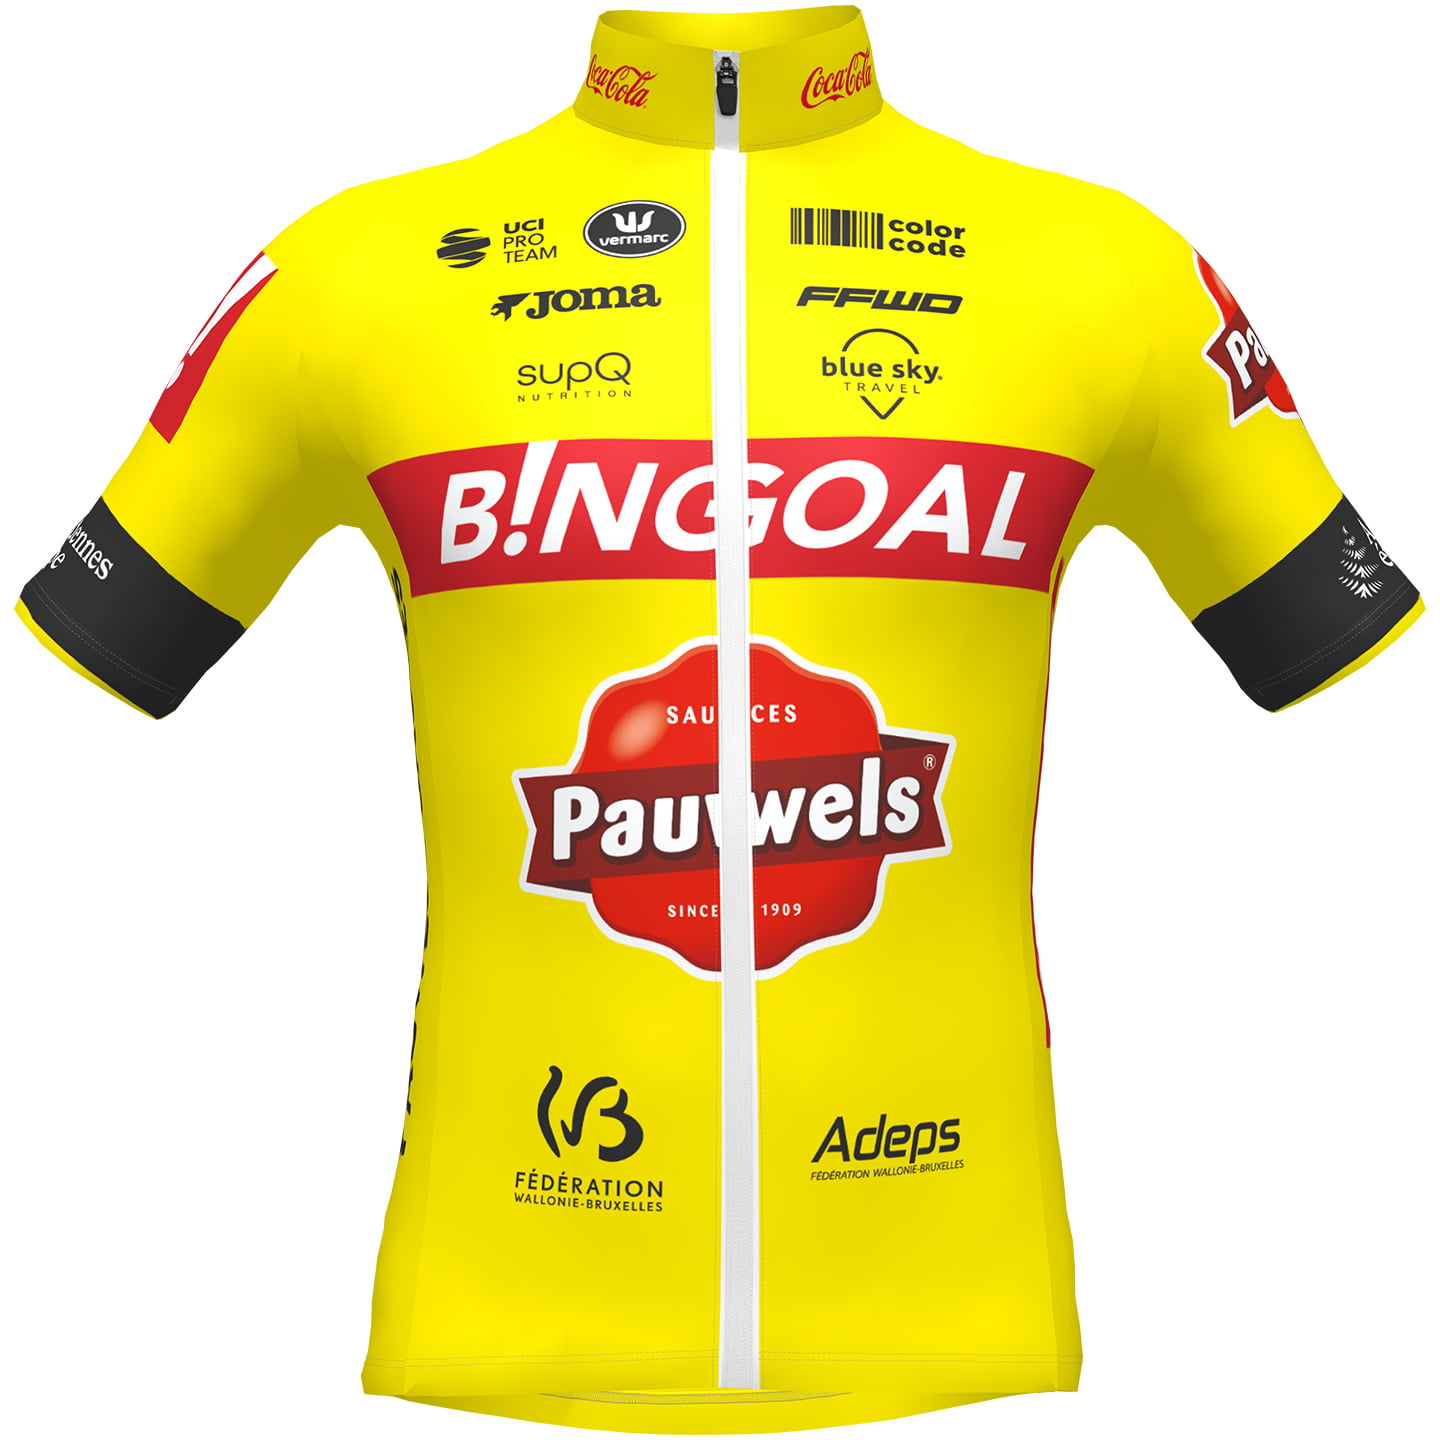 BINGOAL PAUWELS SAUCES WB 2022 Short Sleeve Jersey, for men, size 2XL, Cycle shirt, Bike gear